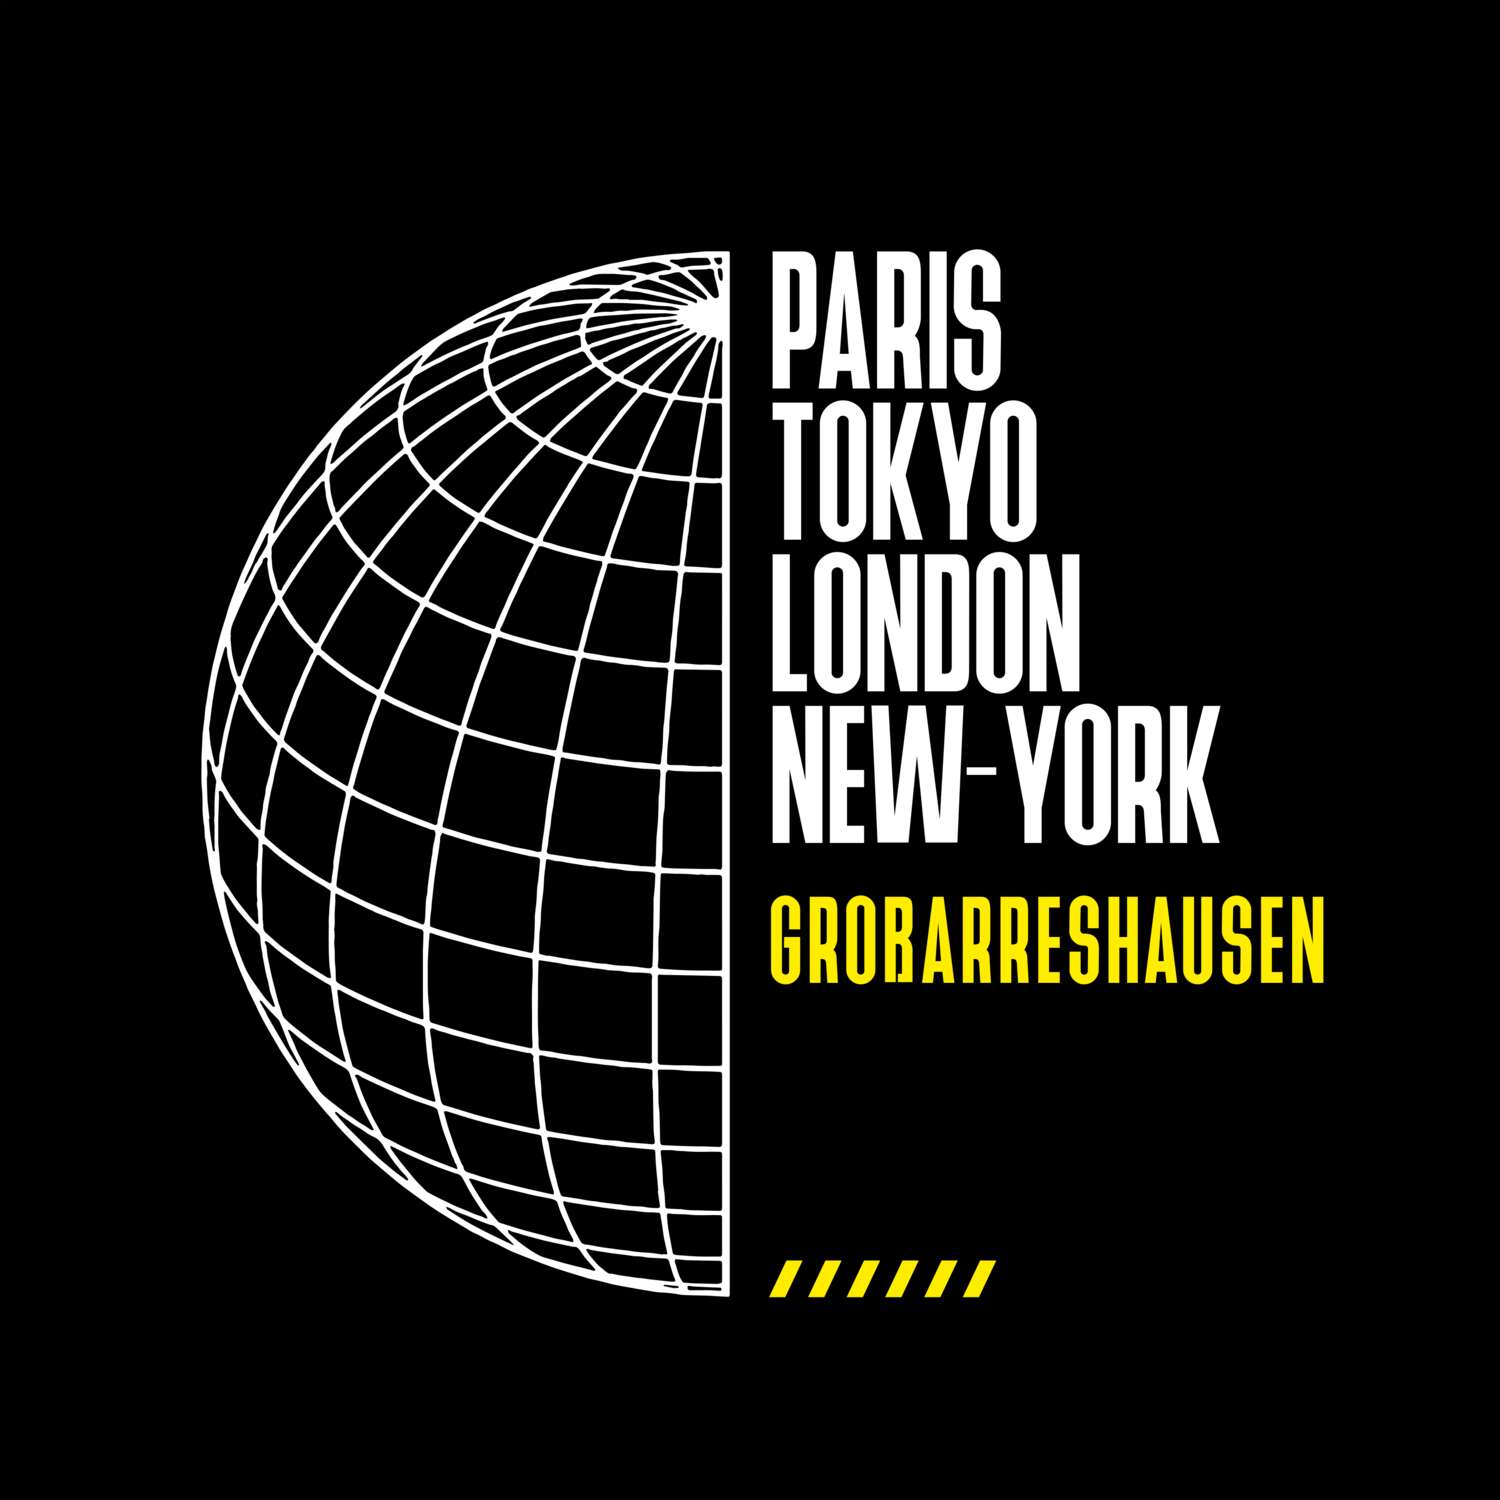 Großarreshausen T-Shirt »Paris Tokyo London«